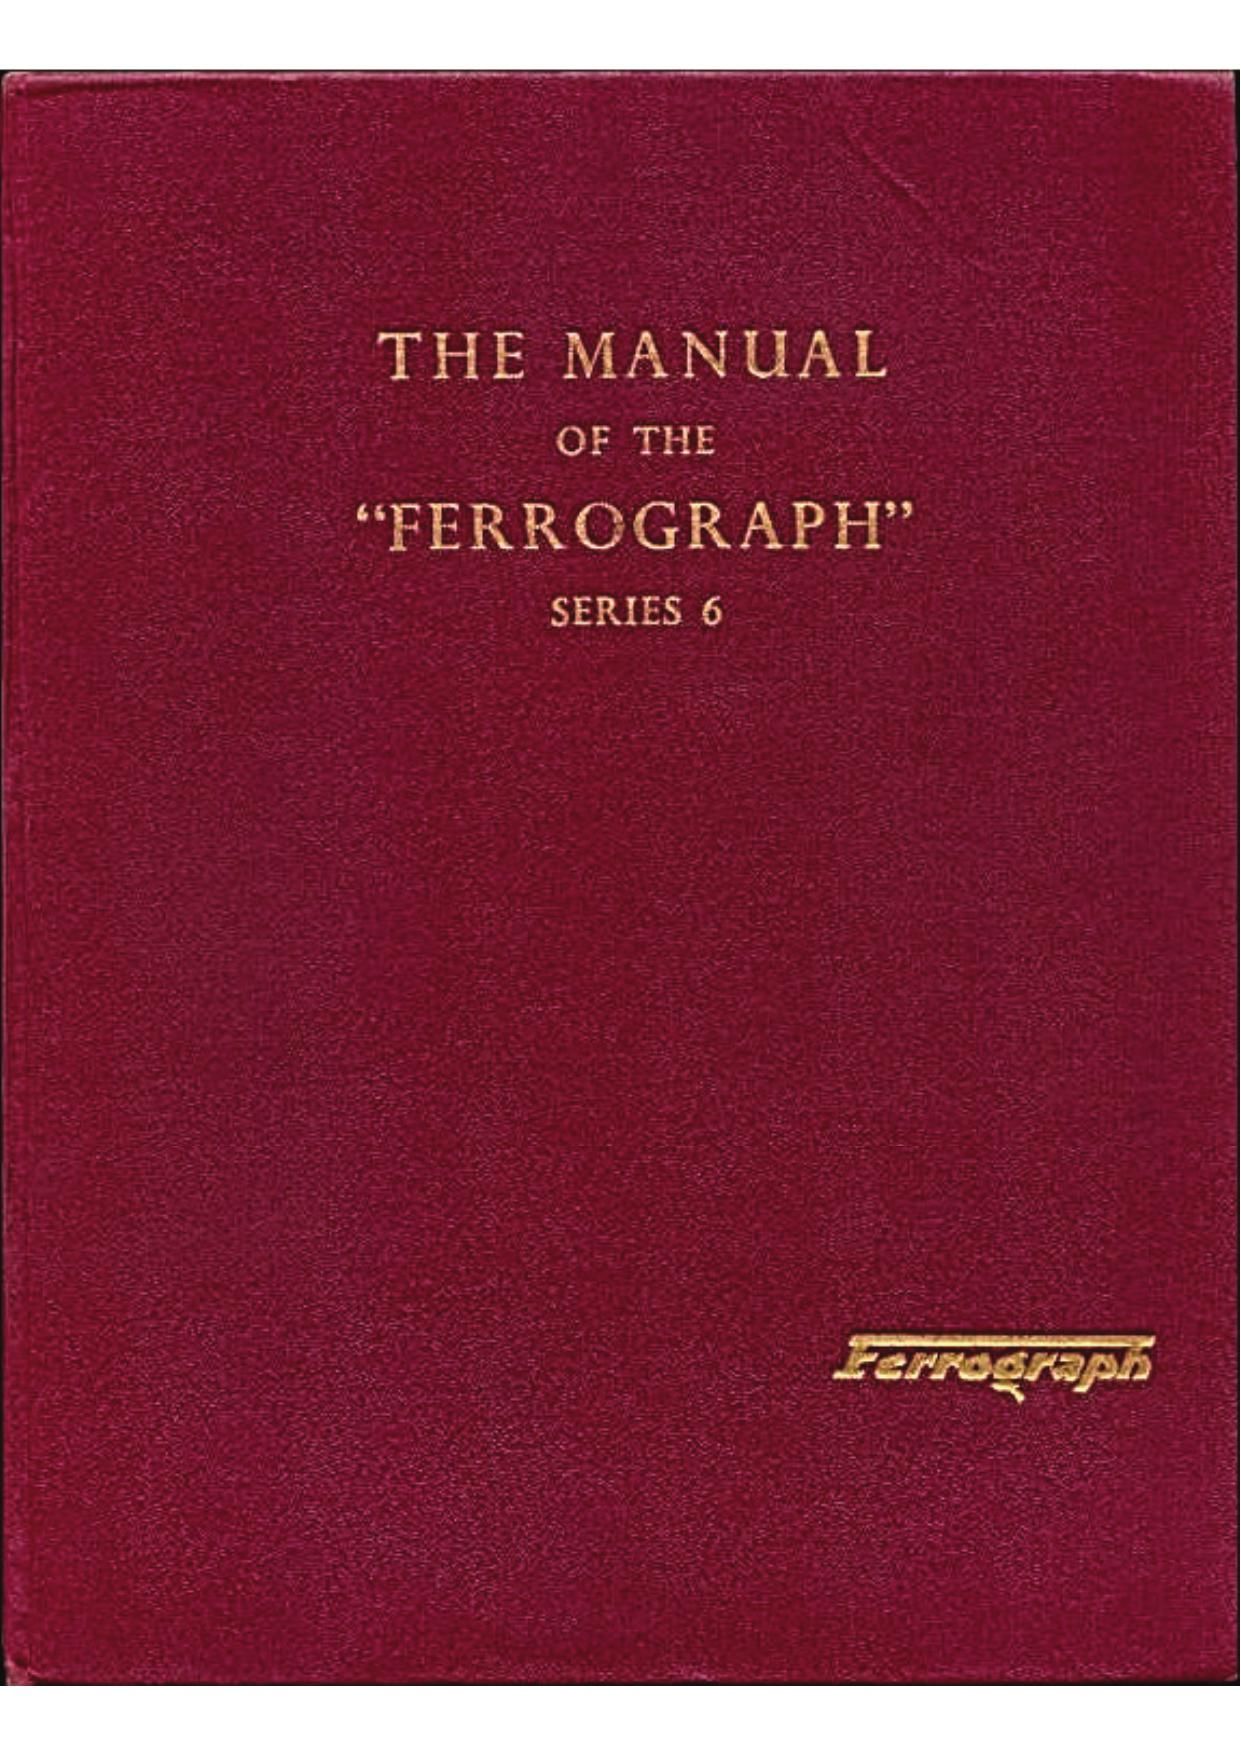 Ferrograph 632 H Service Manual